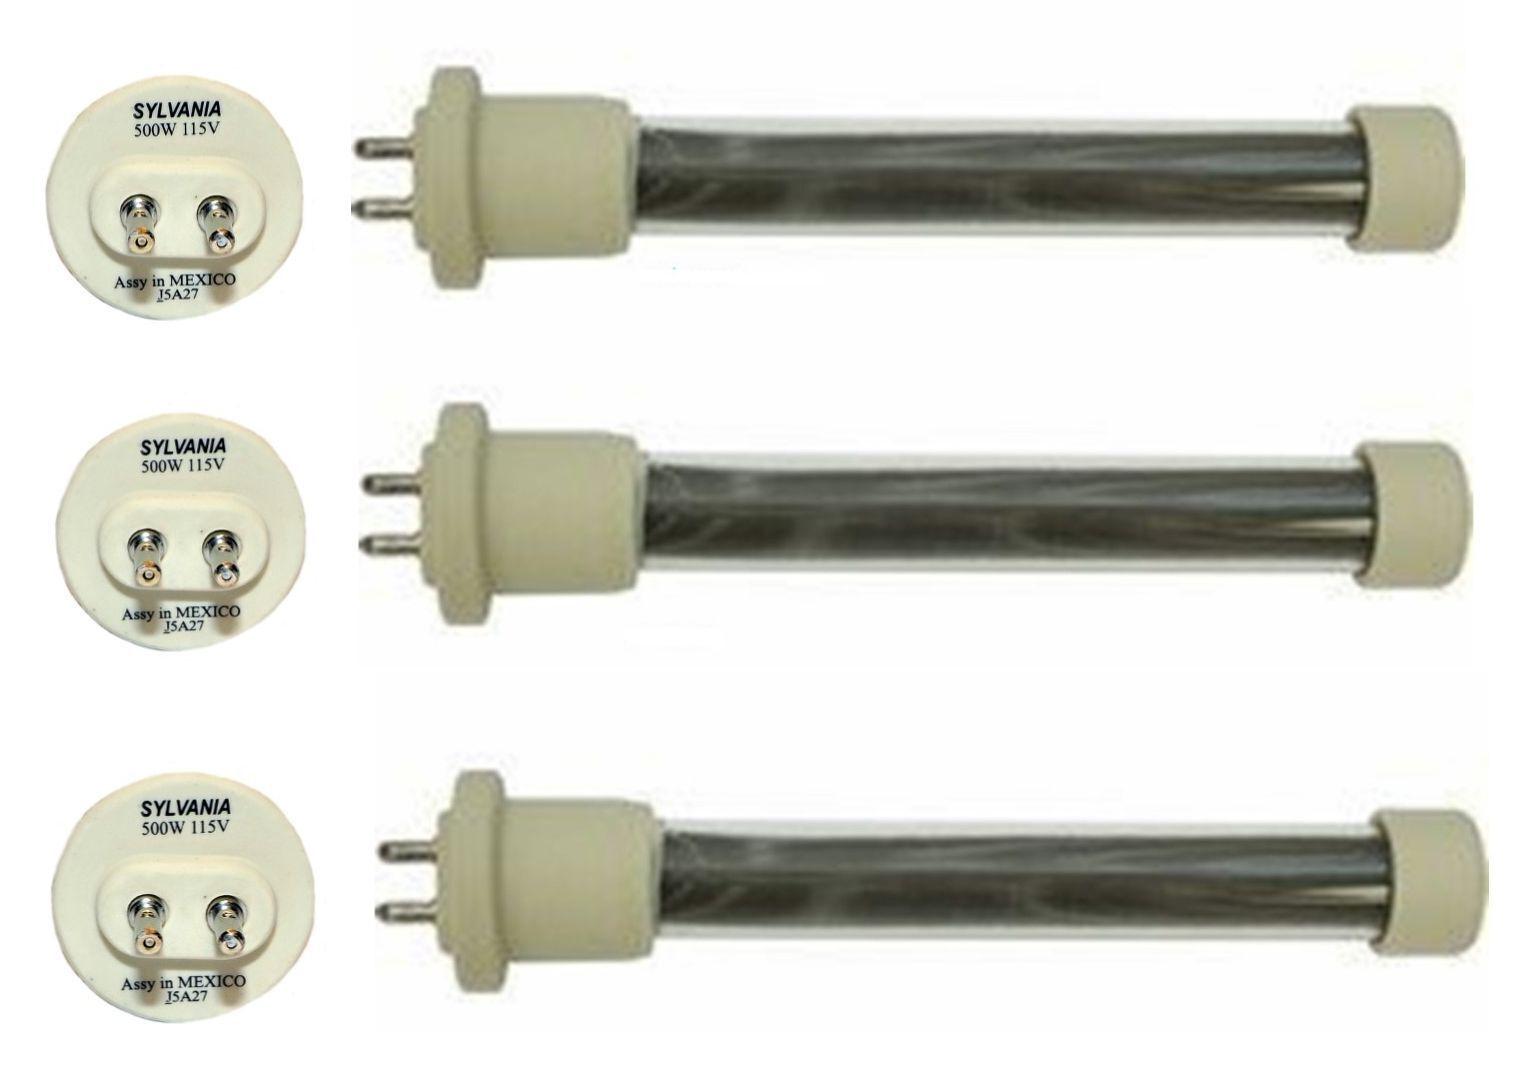 New EdenPURE GEN 4 USA 1000 Bulb Kit Set of 3 Sylvania Heating Elements US001